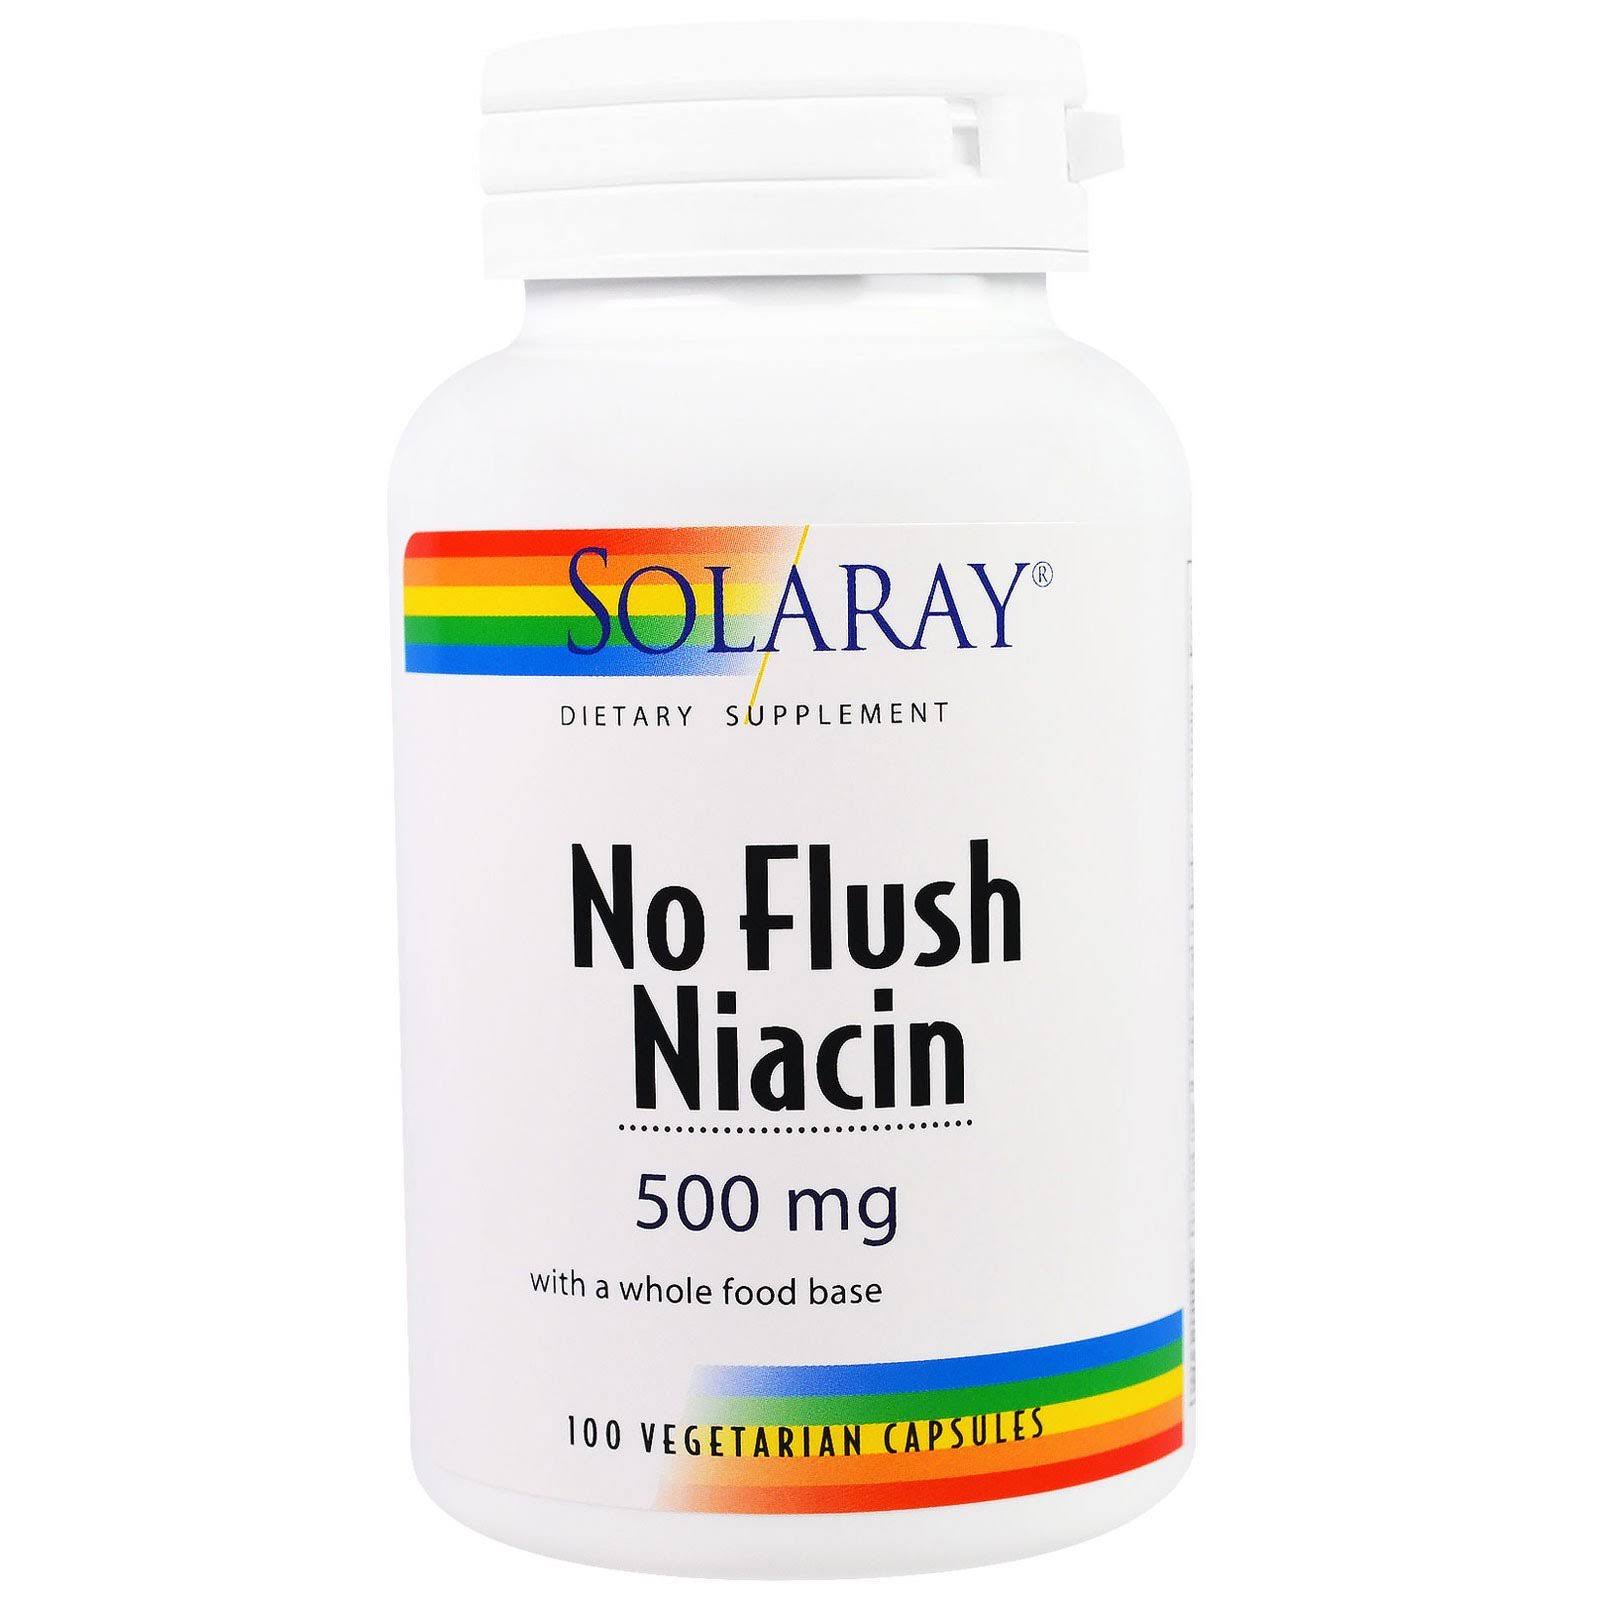 Solaray No Flush Niacin 500mg Dietary Supplement - 100 Capsules